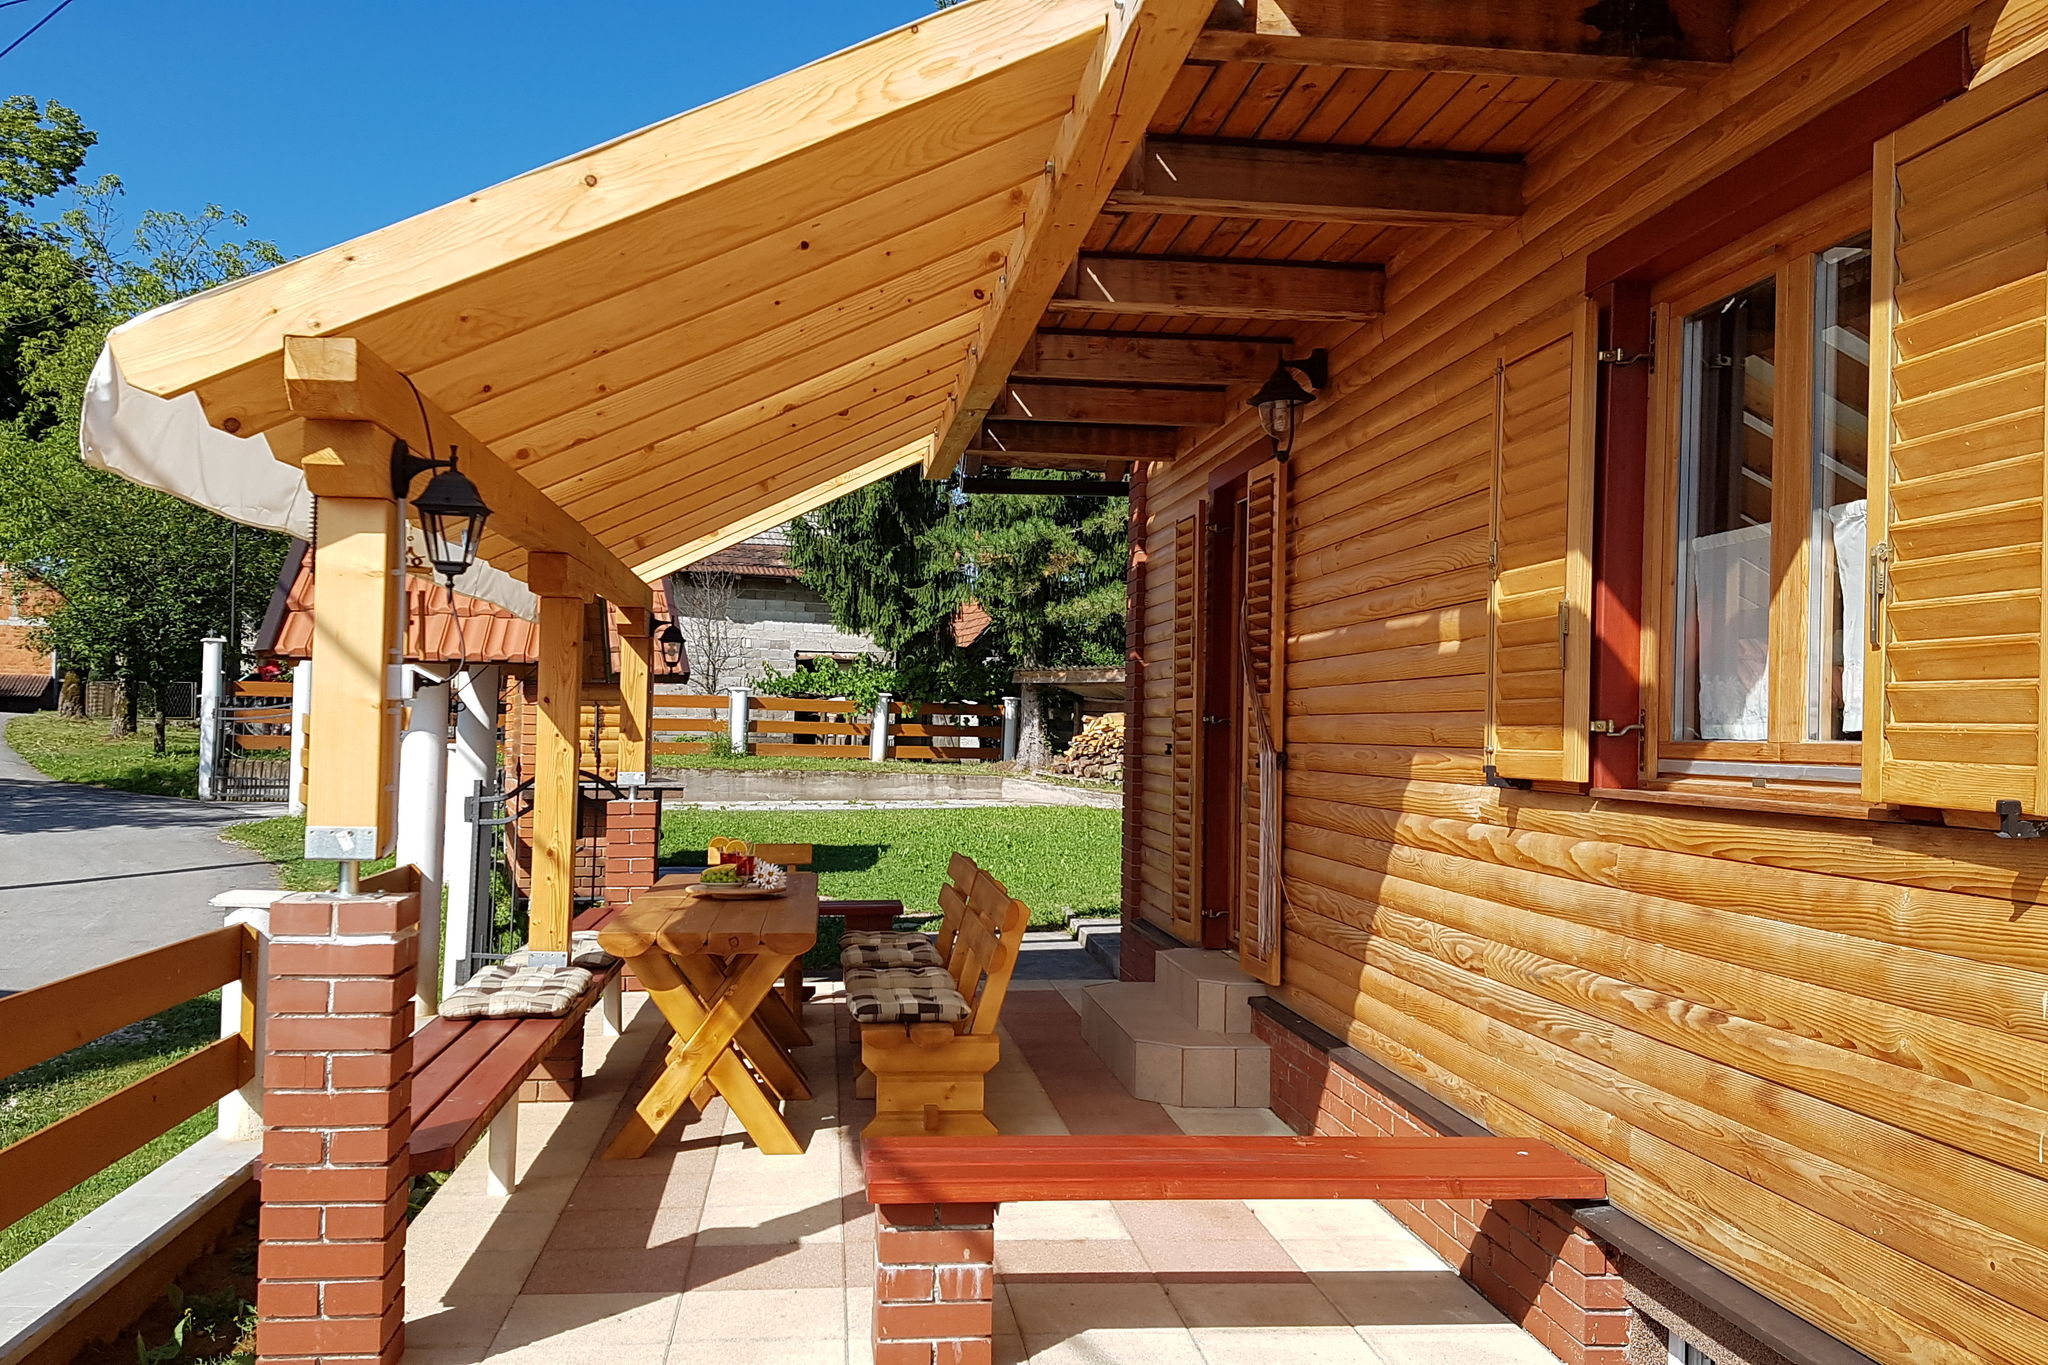 Superbe maison de vacances Ogulin Lika à Karlovac en Croatie